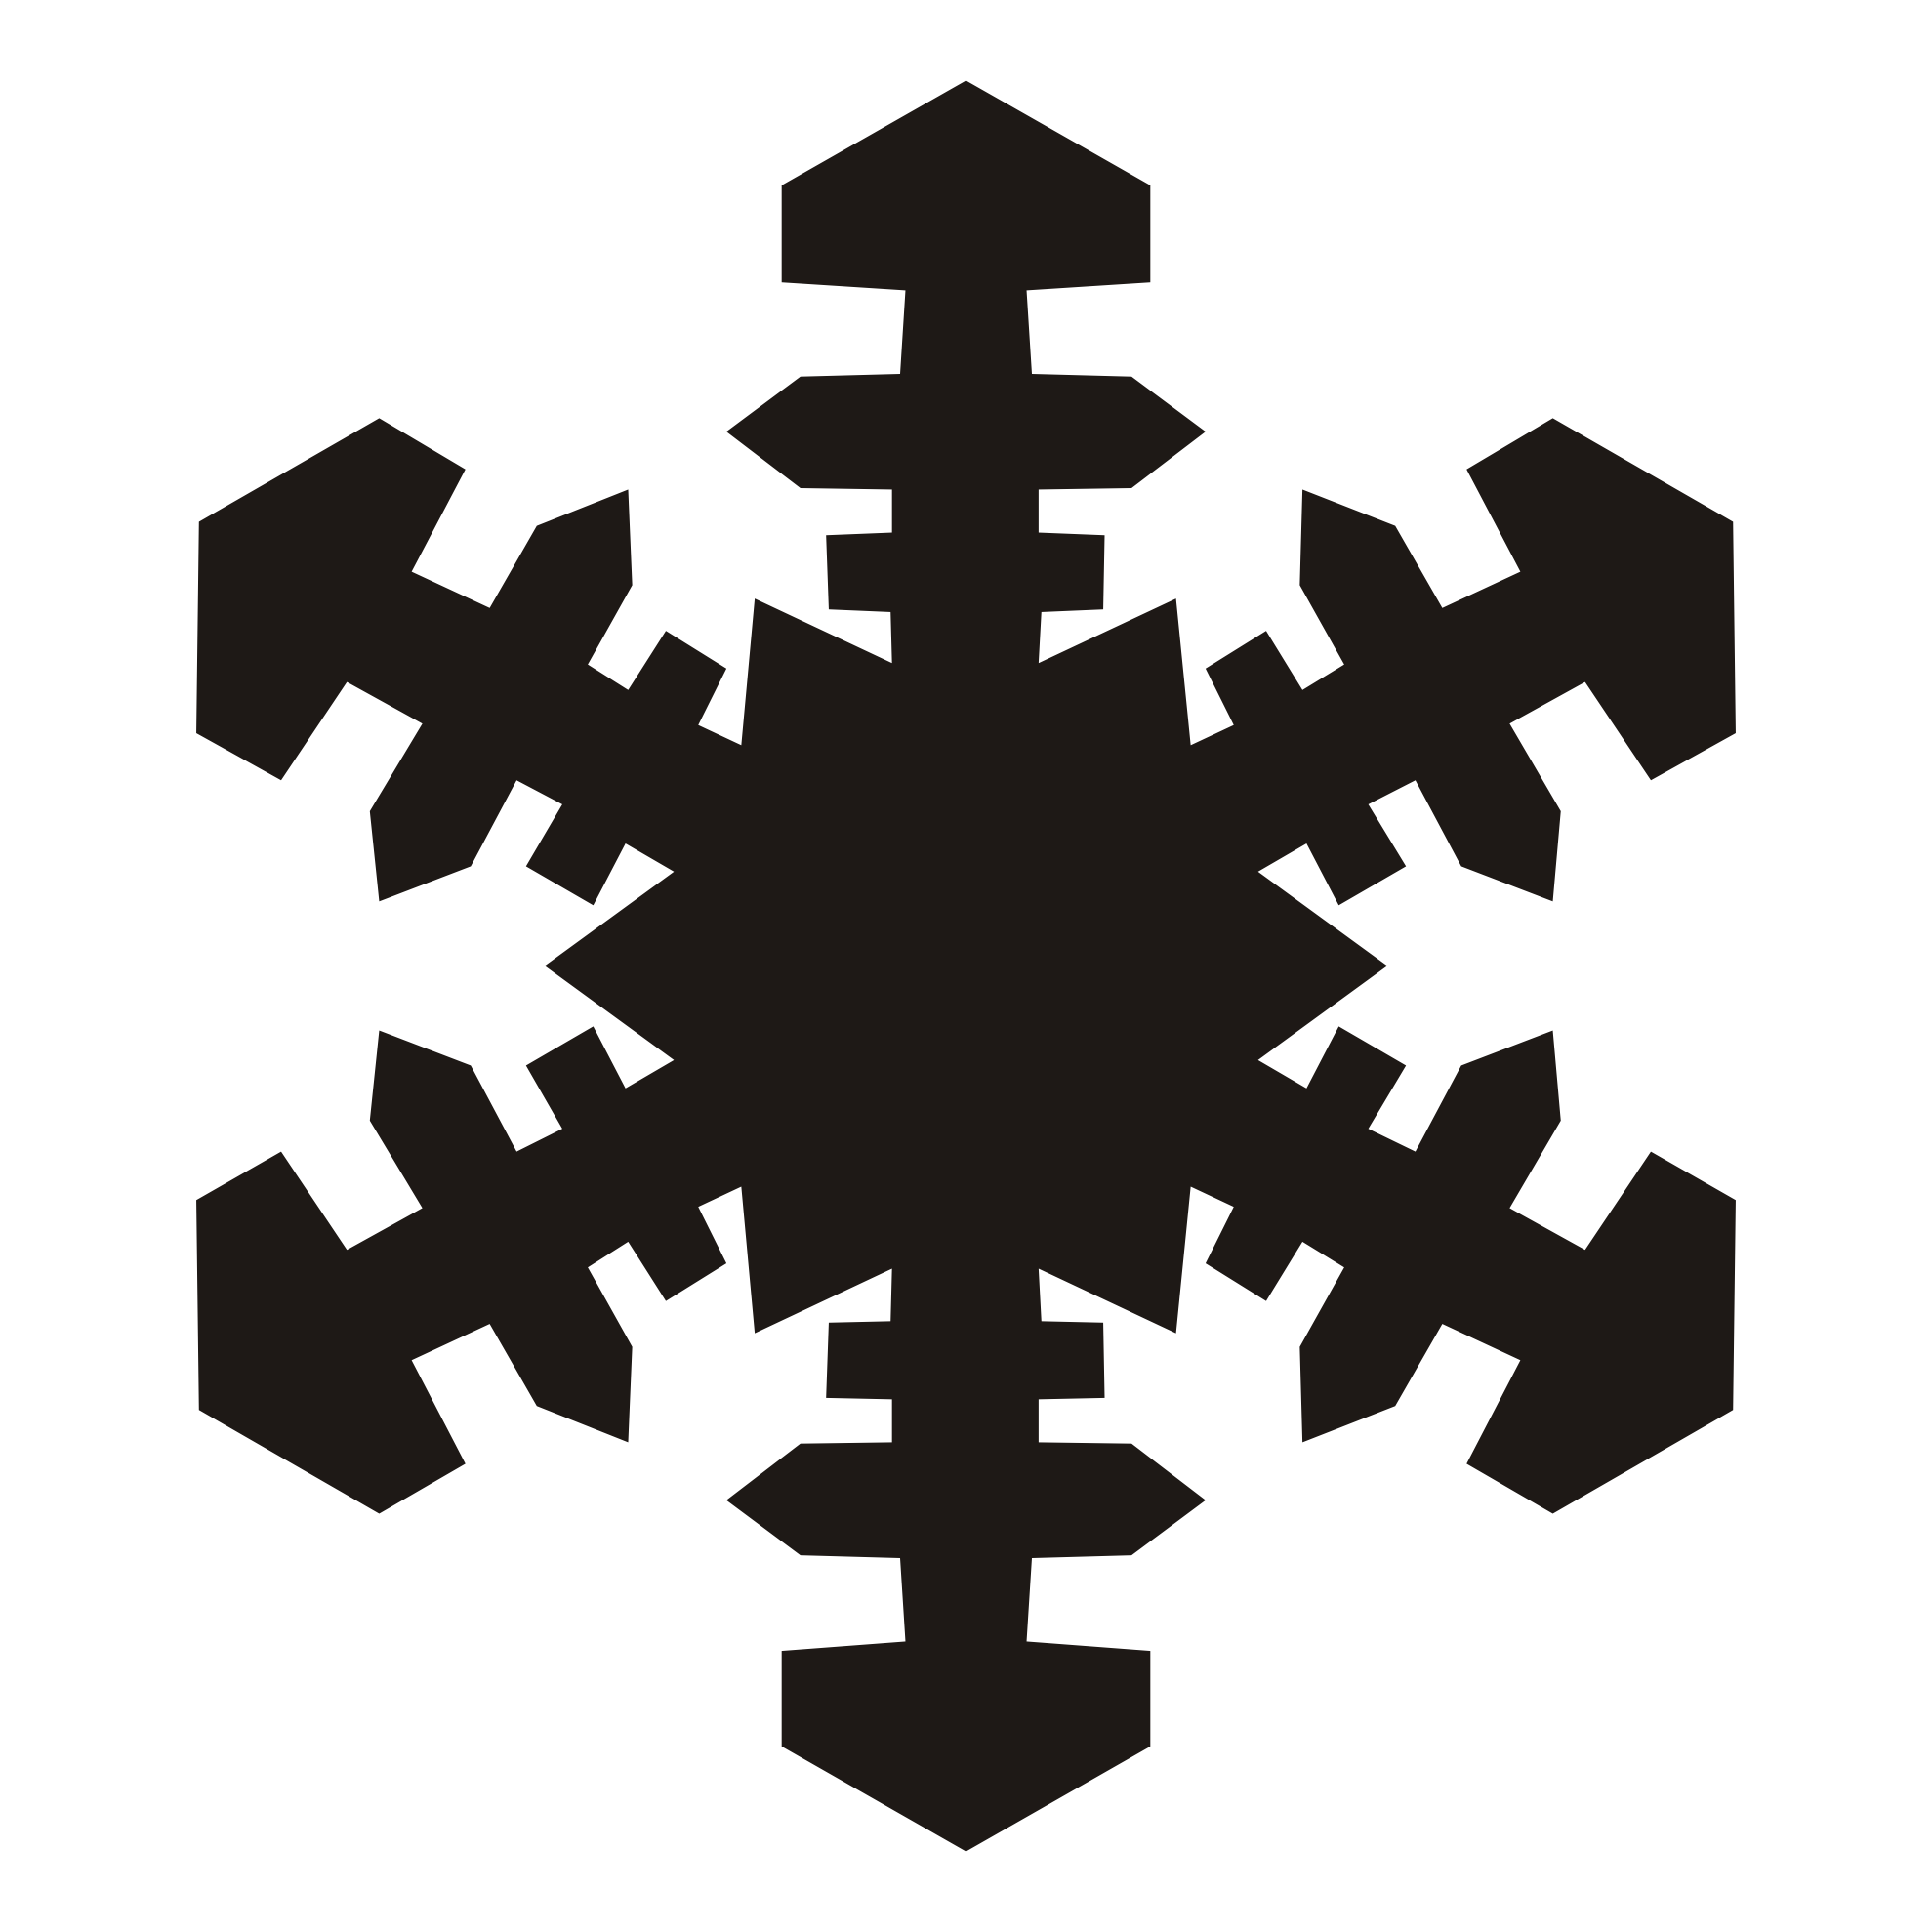 Clipart Snowflakes - ClipArt Best